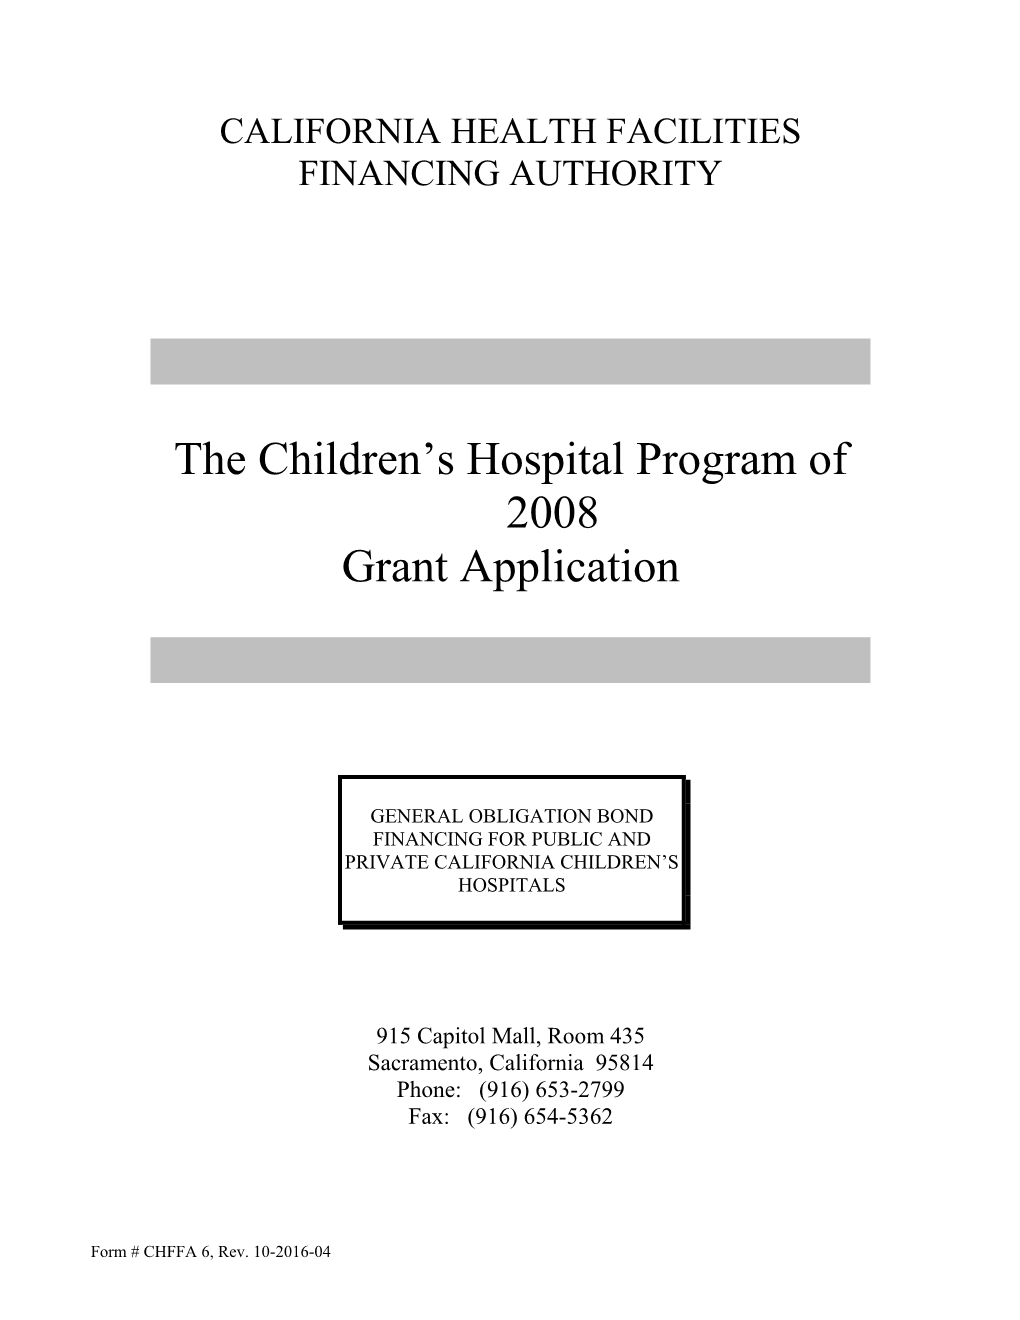 Cedillo-Alarcón CCIA / Grant Program Application